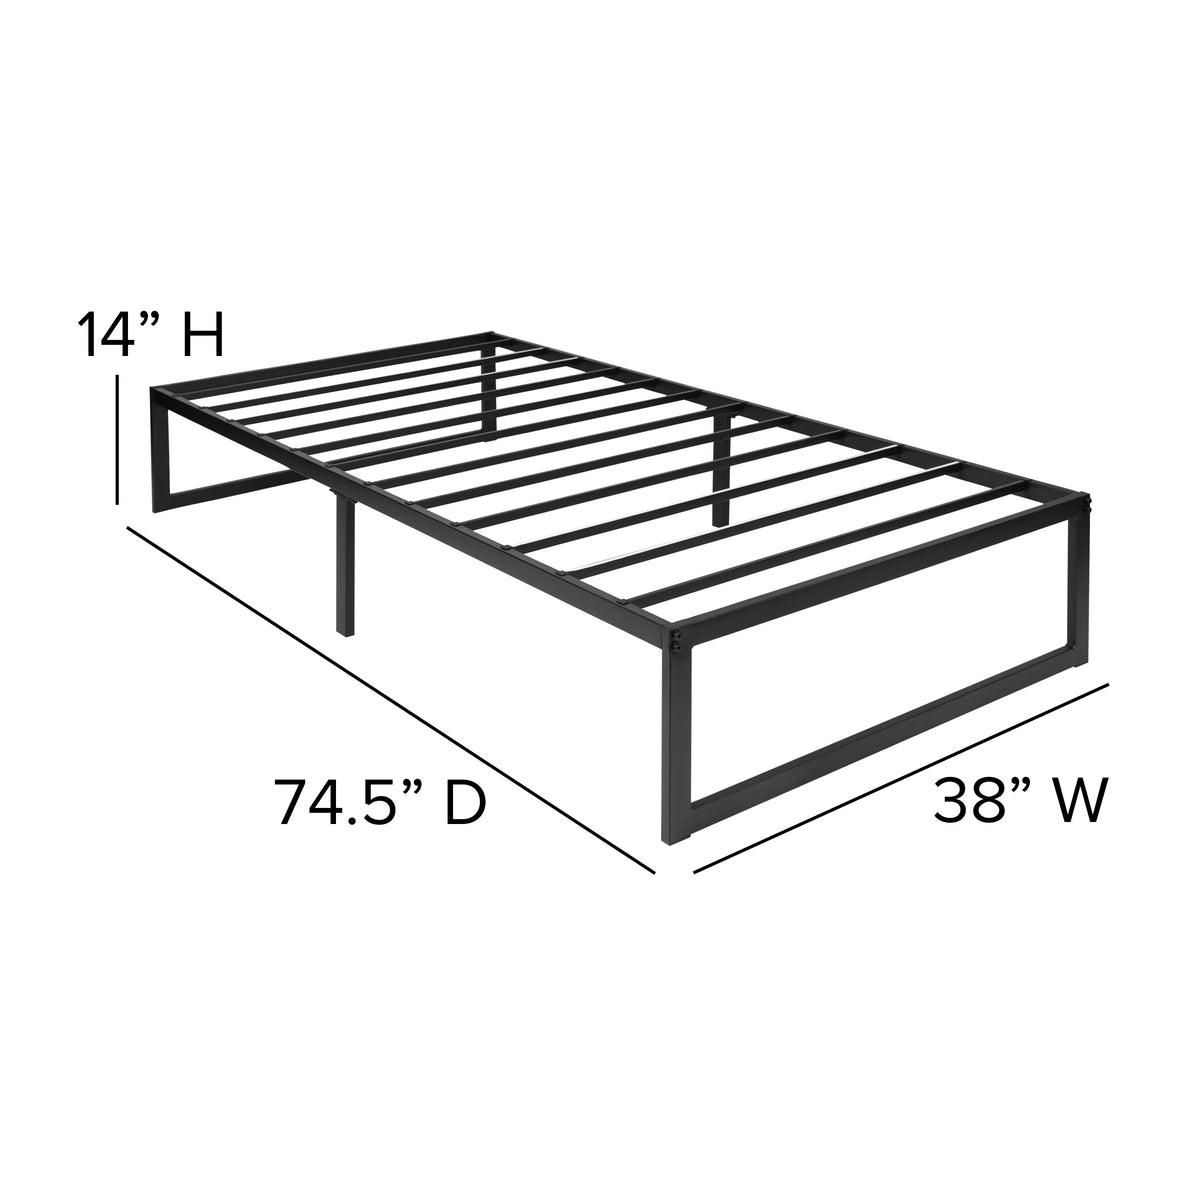 Twin |#| 14inch Twin Platform Bed Frame; 12inch Pocket Spring Mattress & 3inch Memory Foam Topper